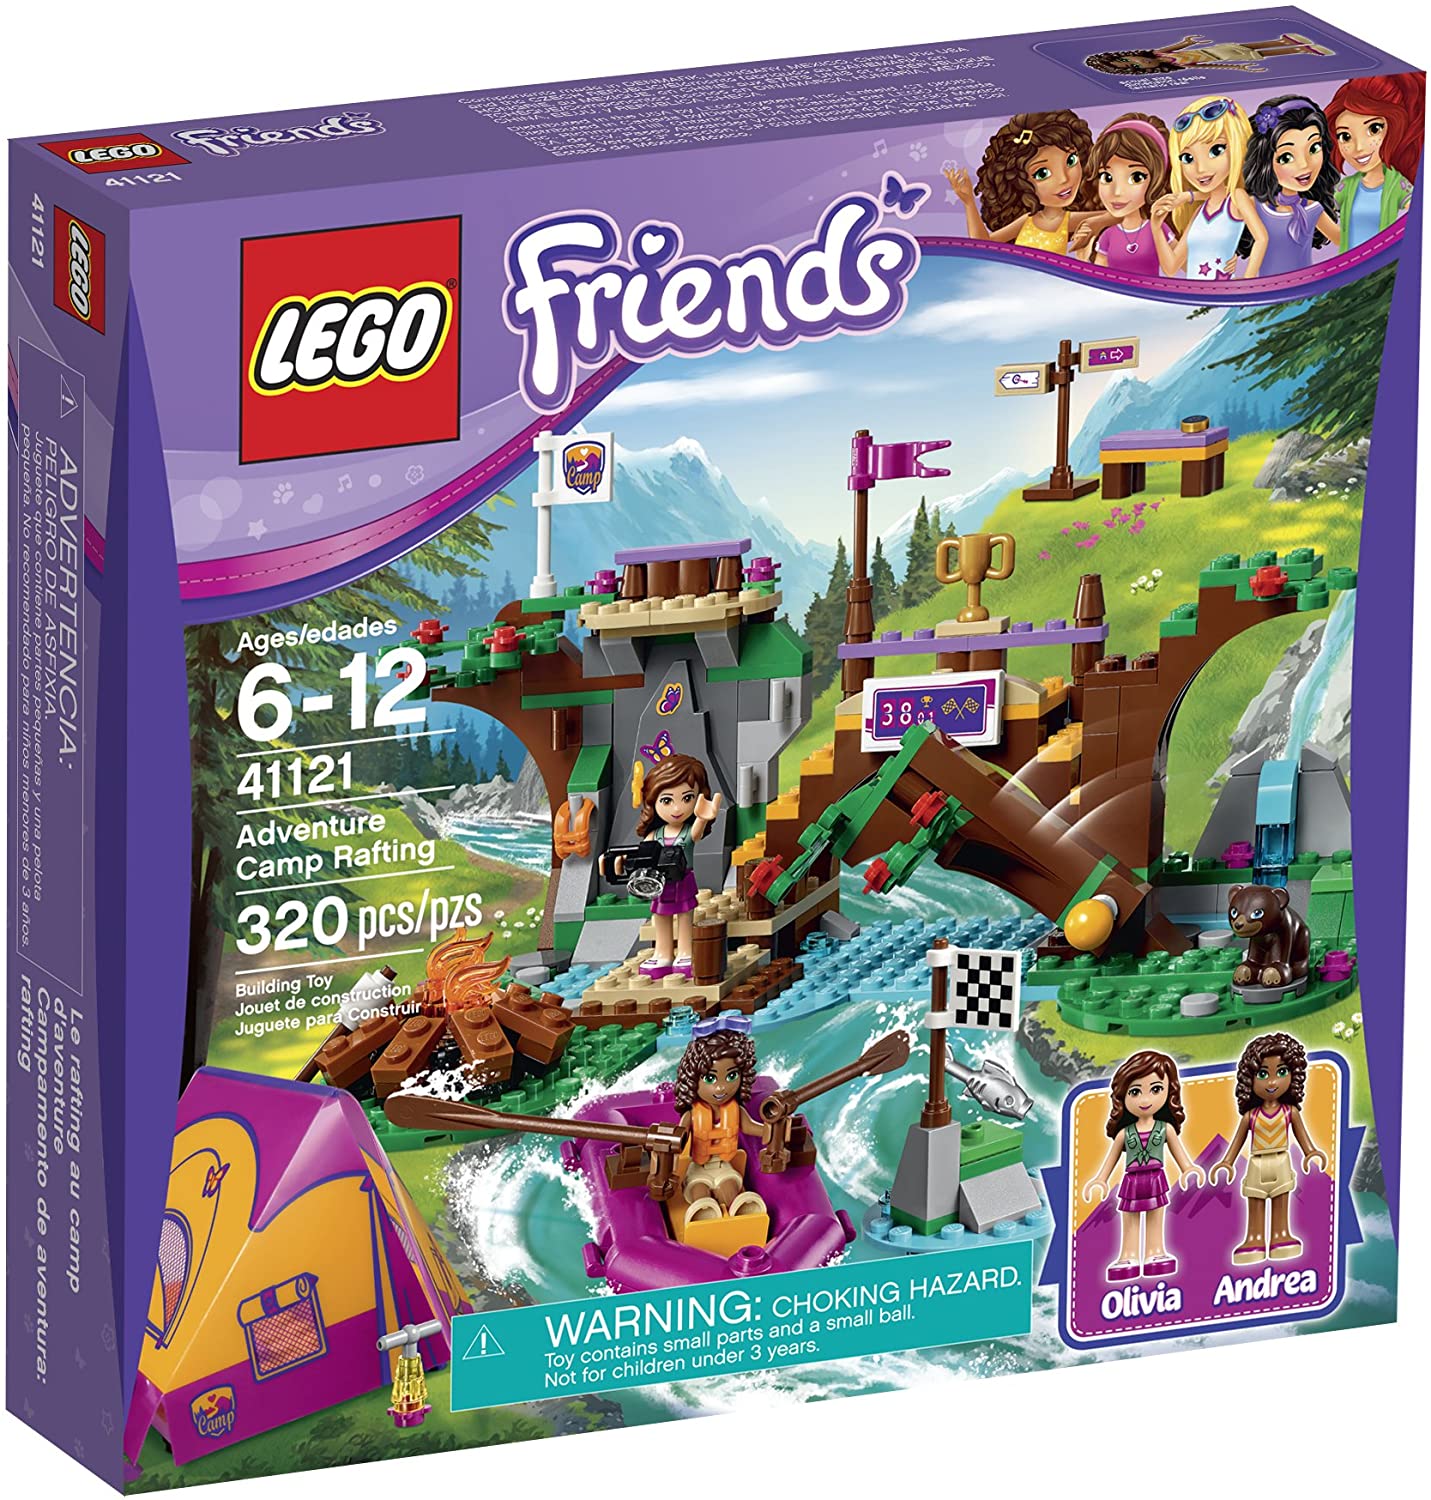 LEGO Friends Adventure Camp Rafting-41121